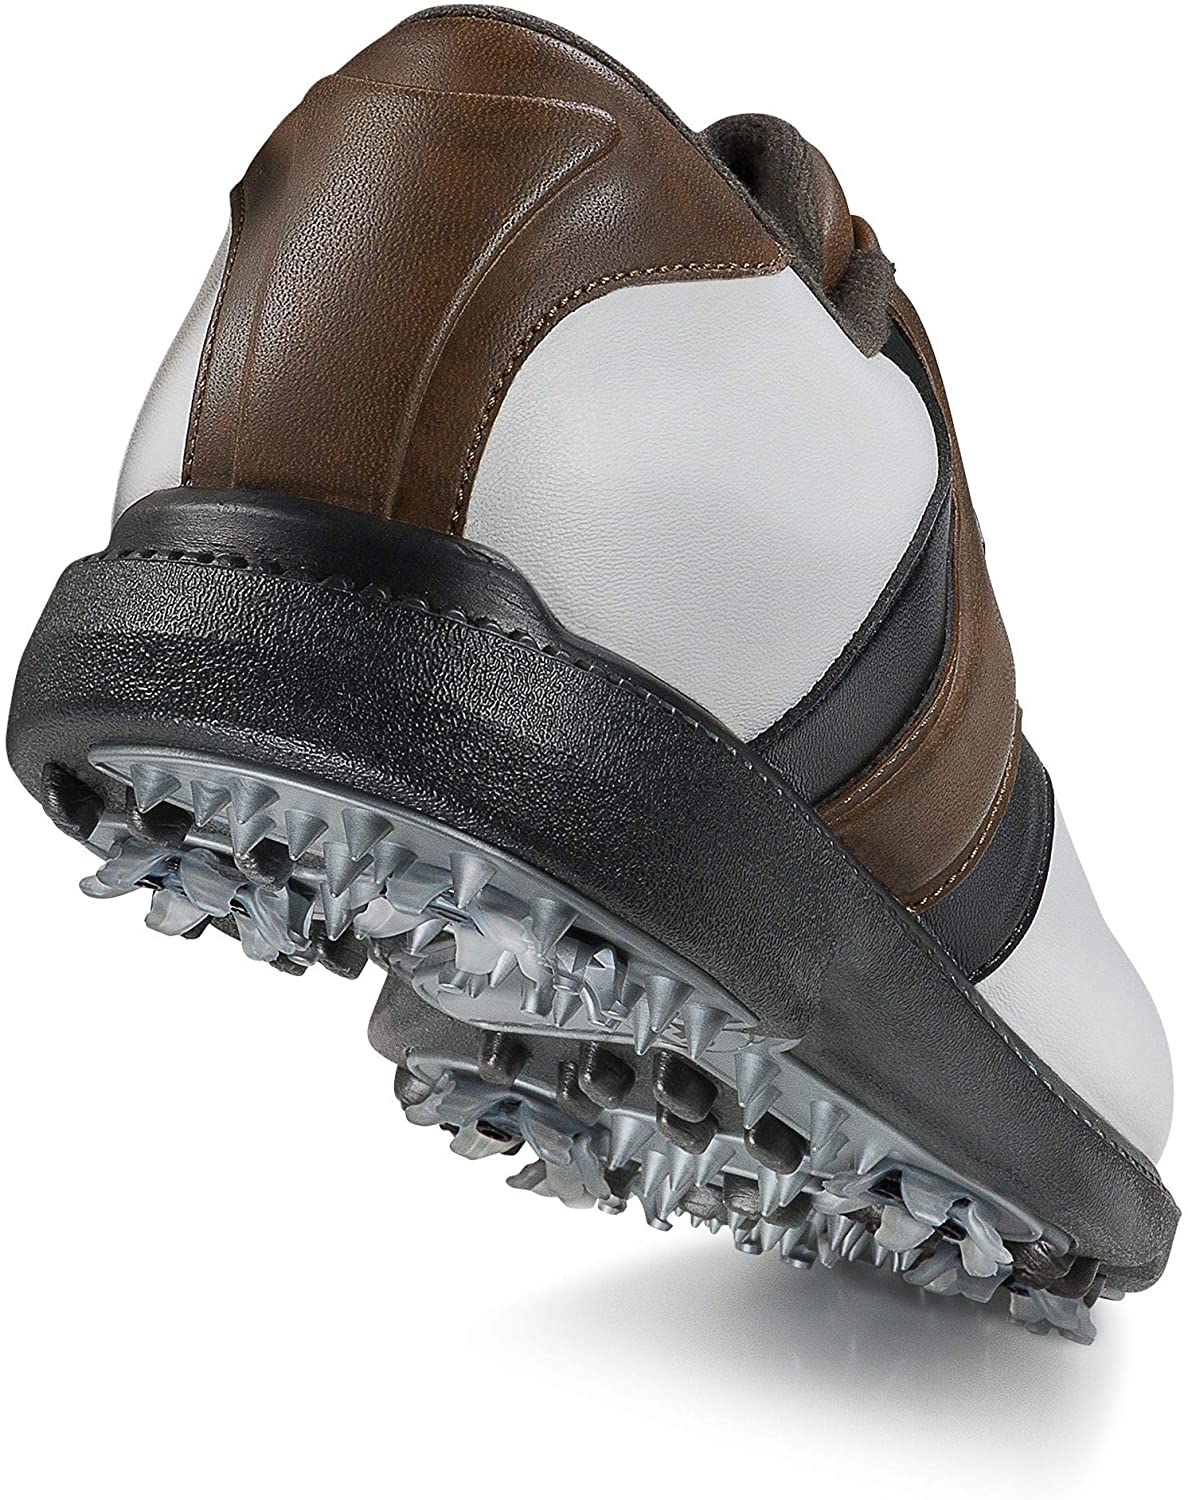 FootJoy FJ Originals Golf Shoes (White/Brown, 10) - image 5 of 7